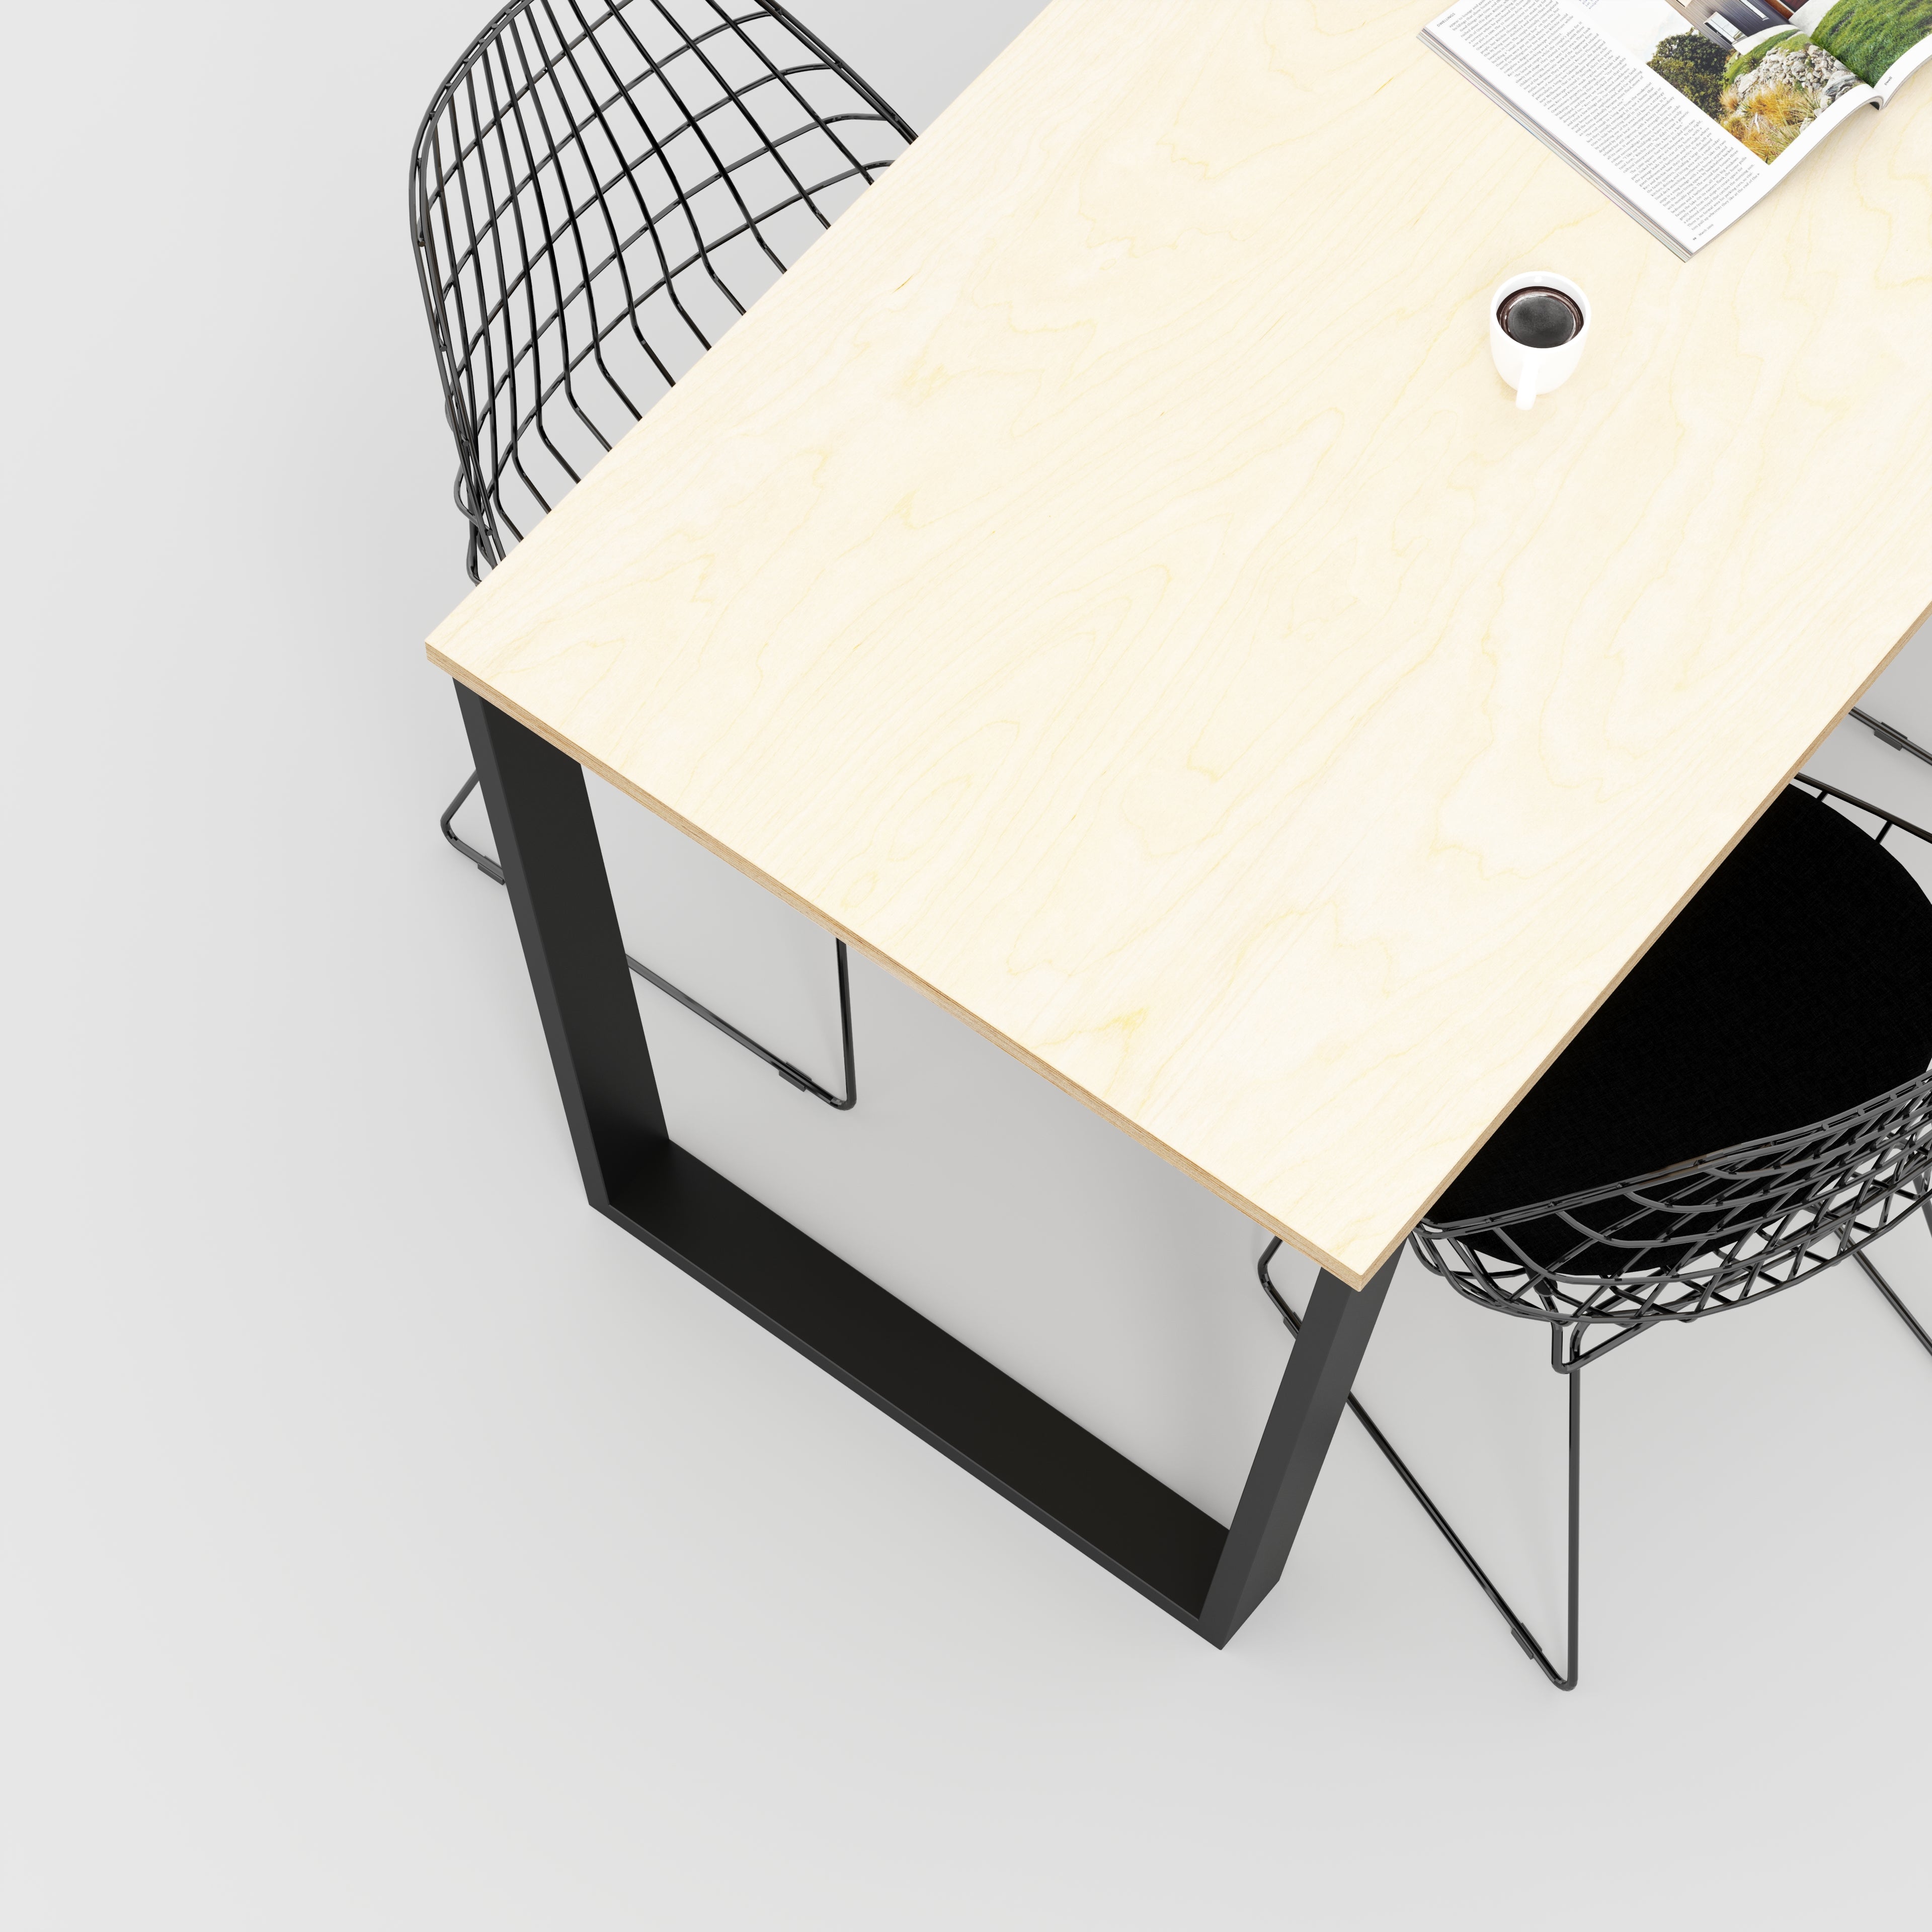 Custom Plywood Table with V-Frame Industrial Legs